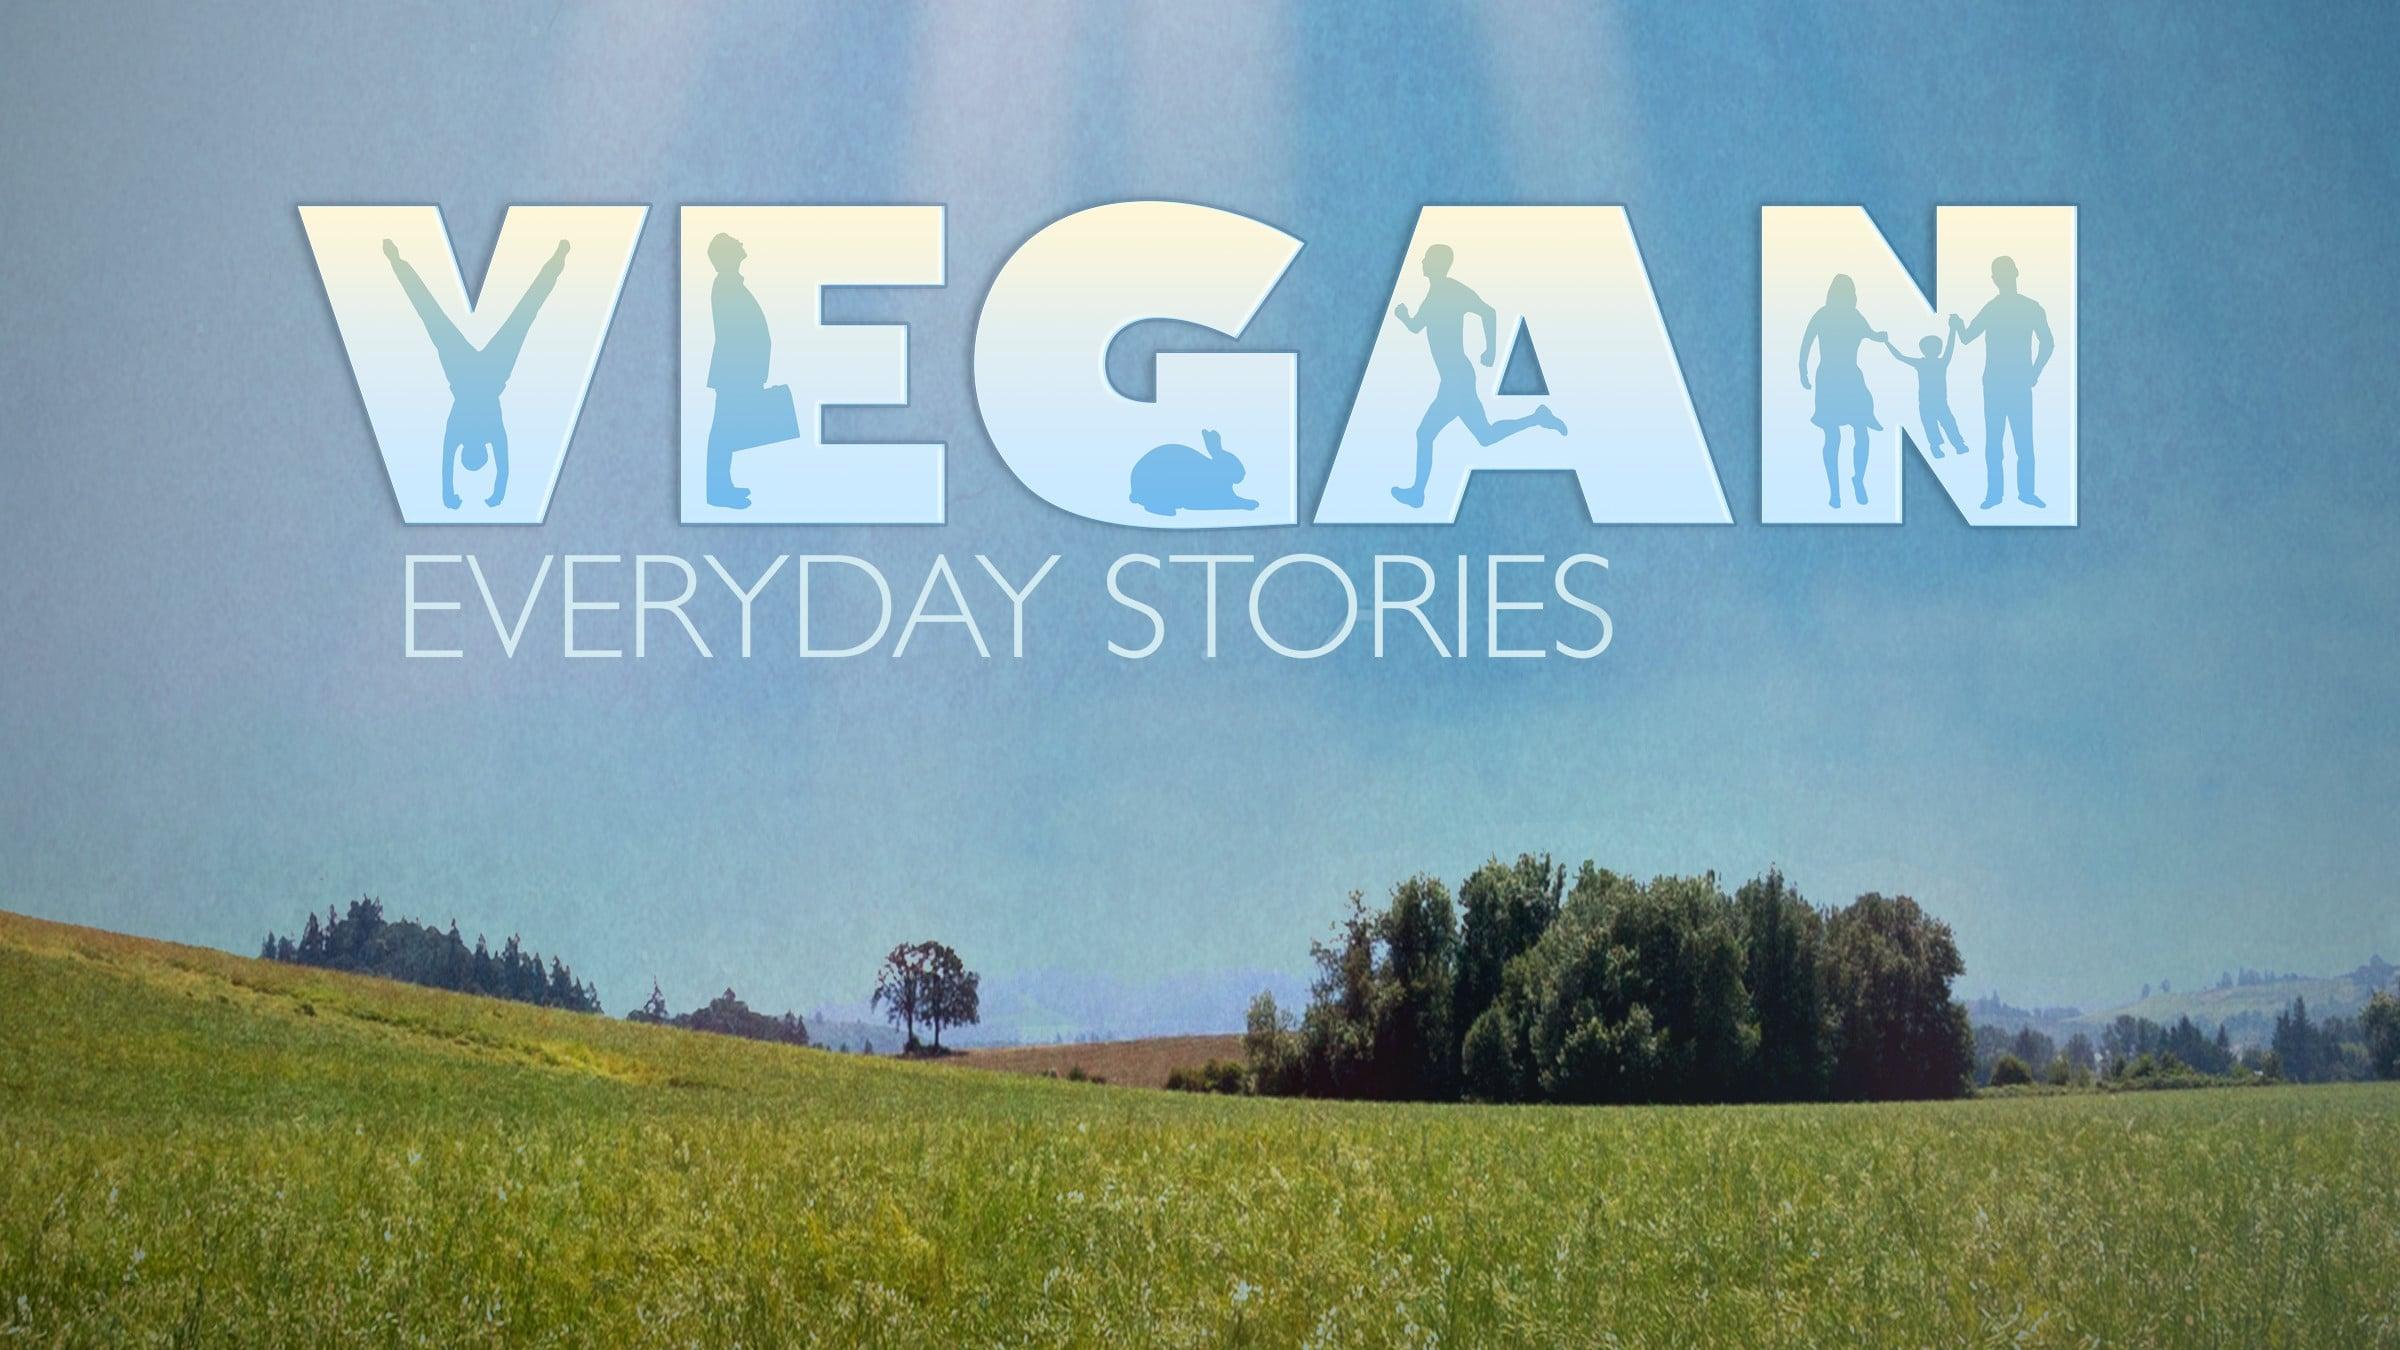 Vegan: Everyday Stories backdrop